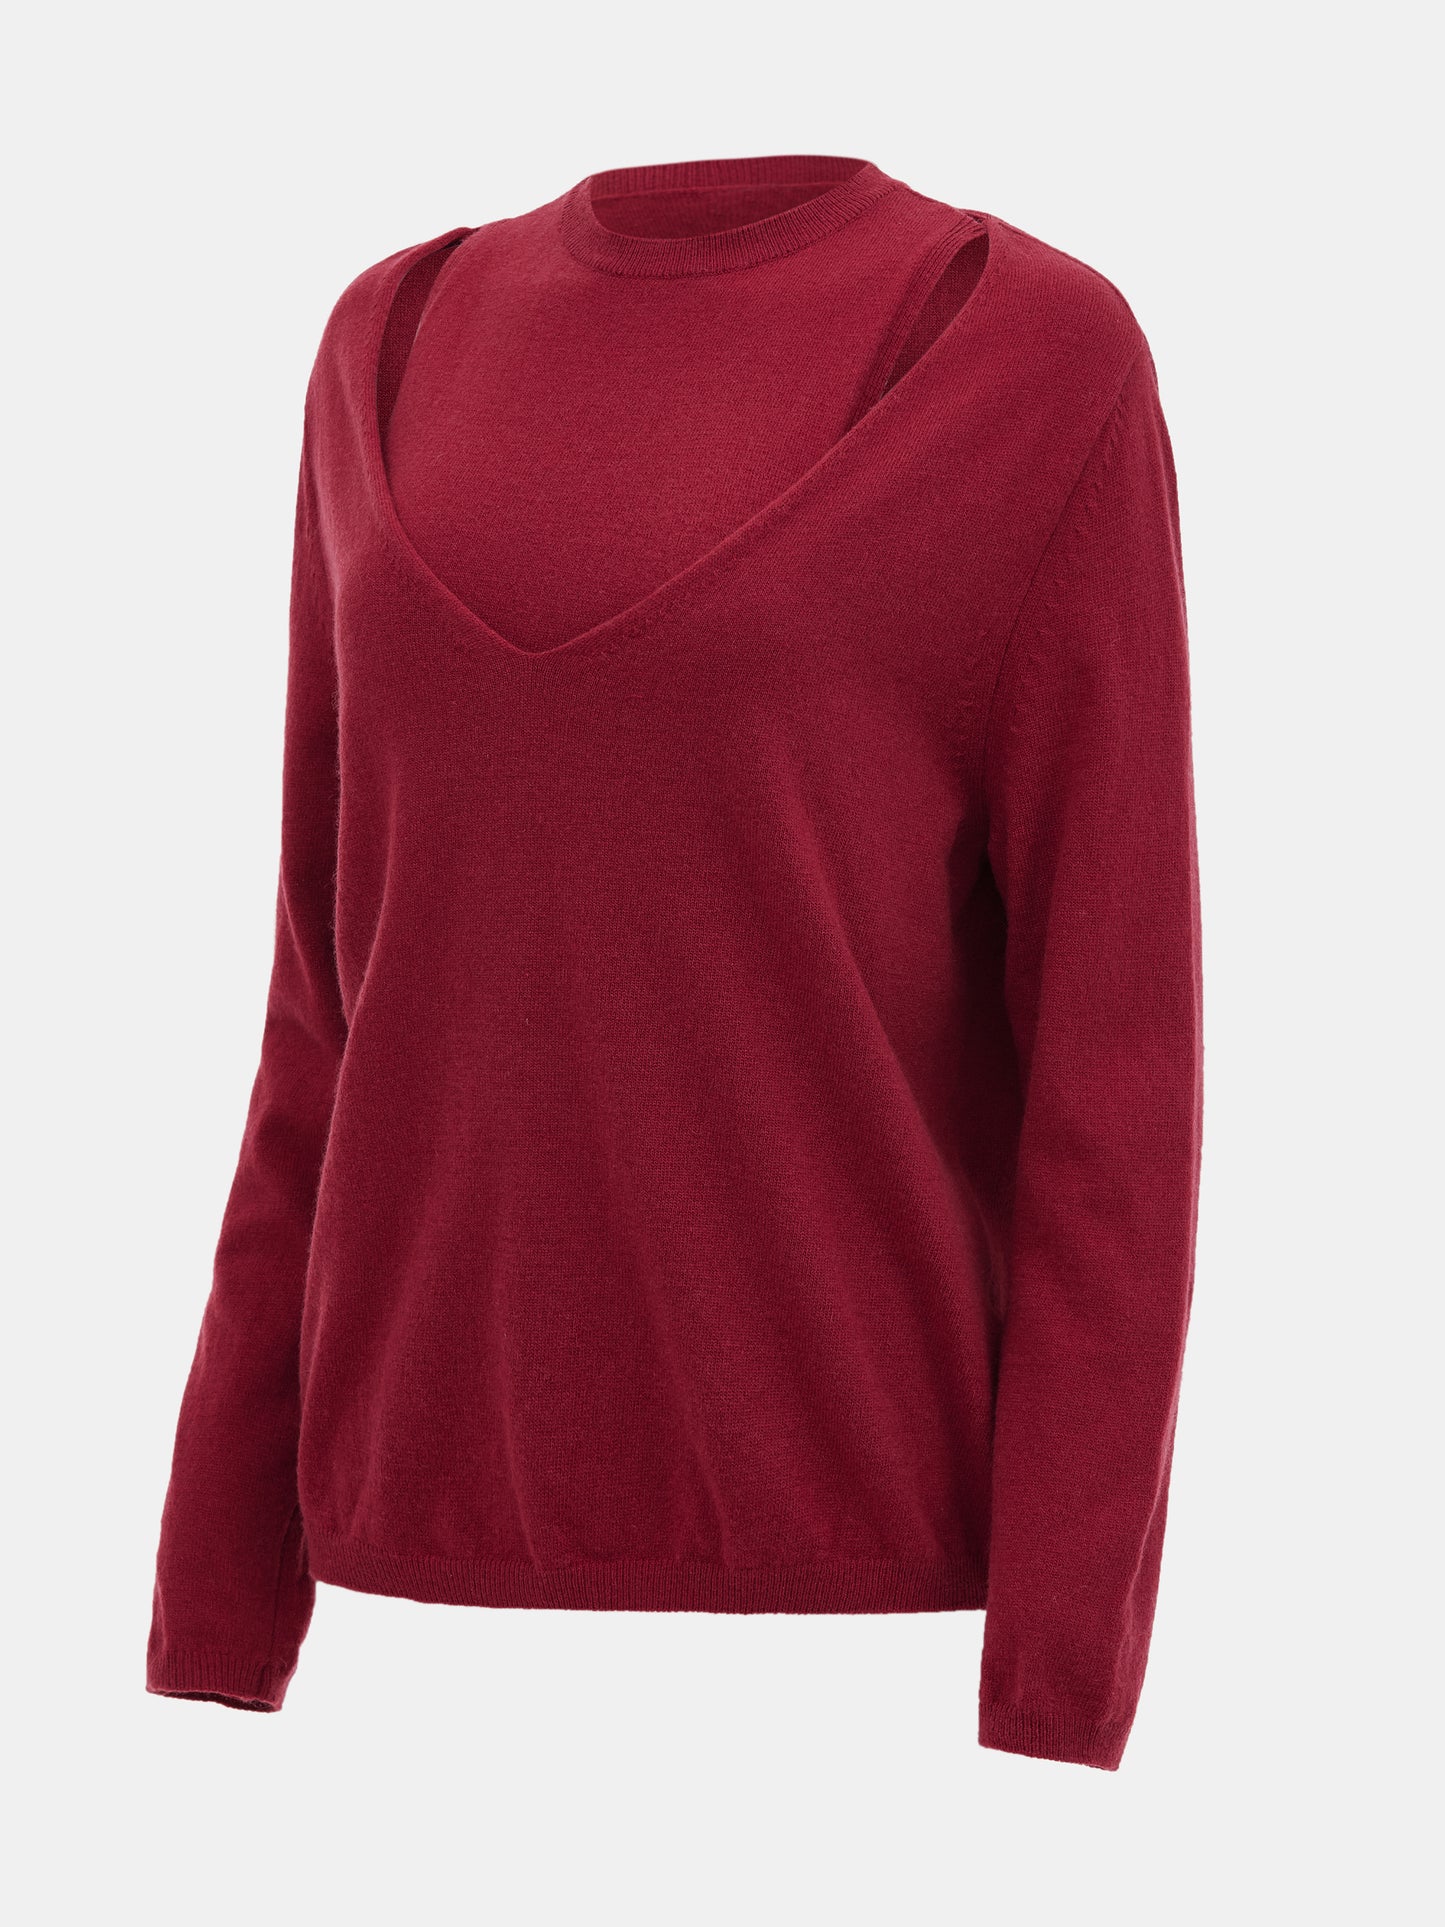 Two-Piece Merino Wool Sweater, Red